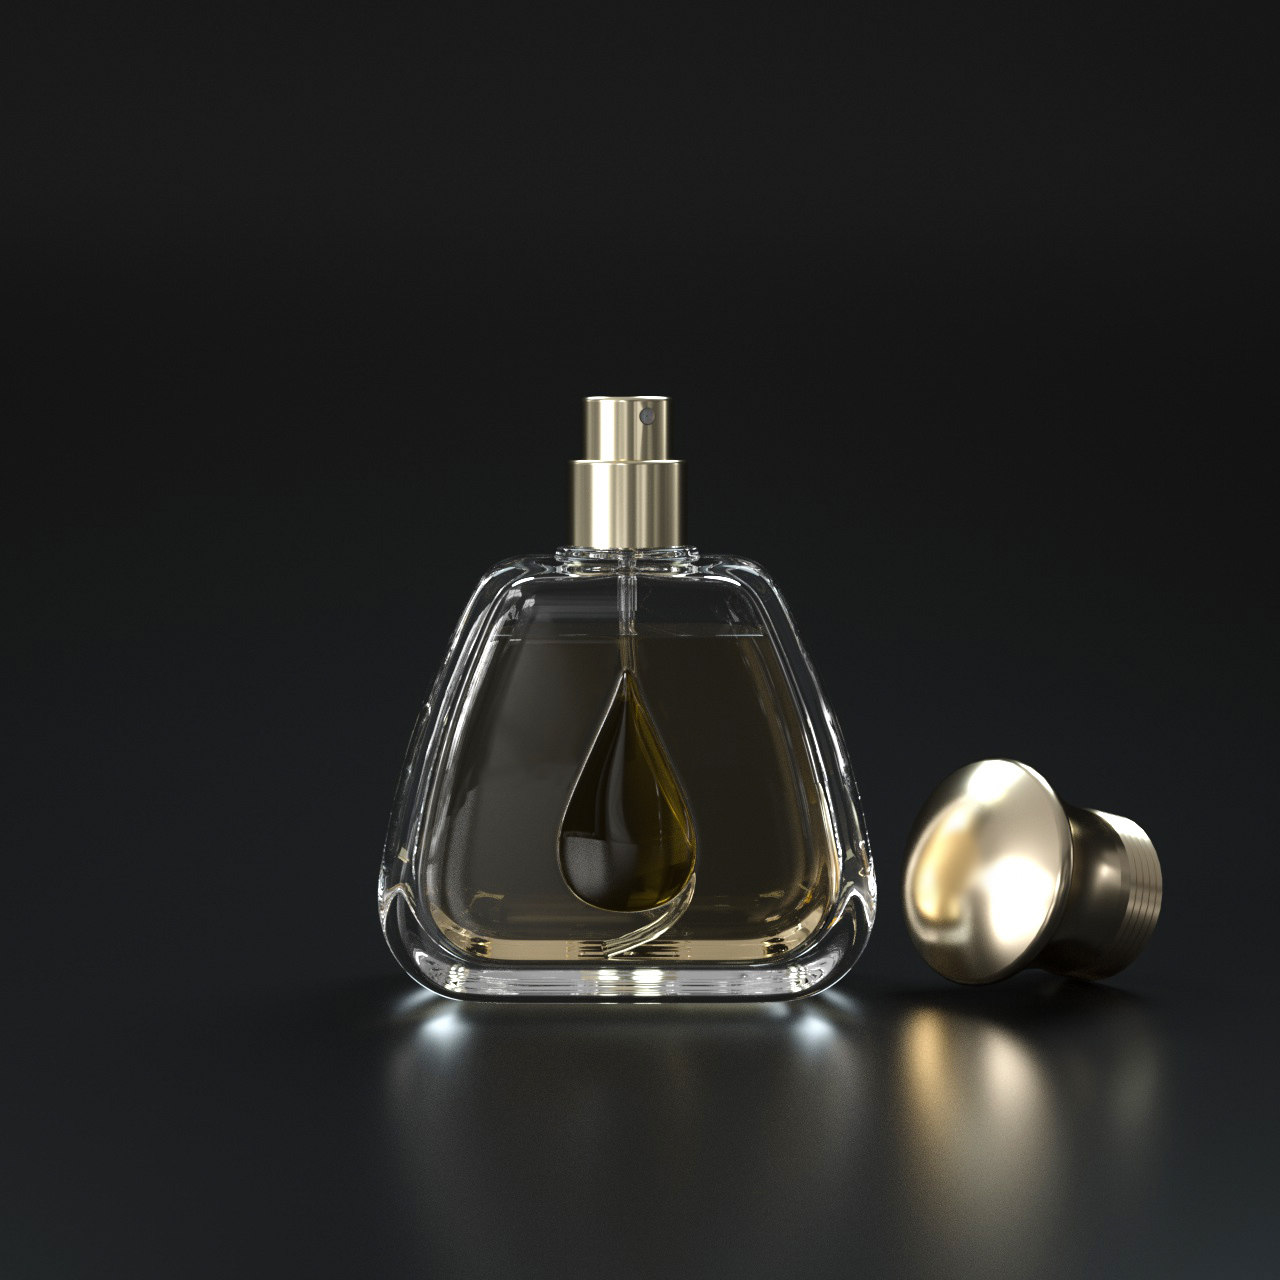 50 ml perfume bottle